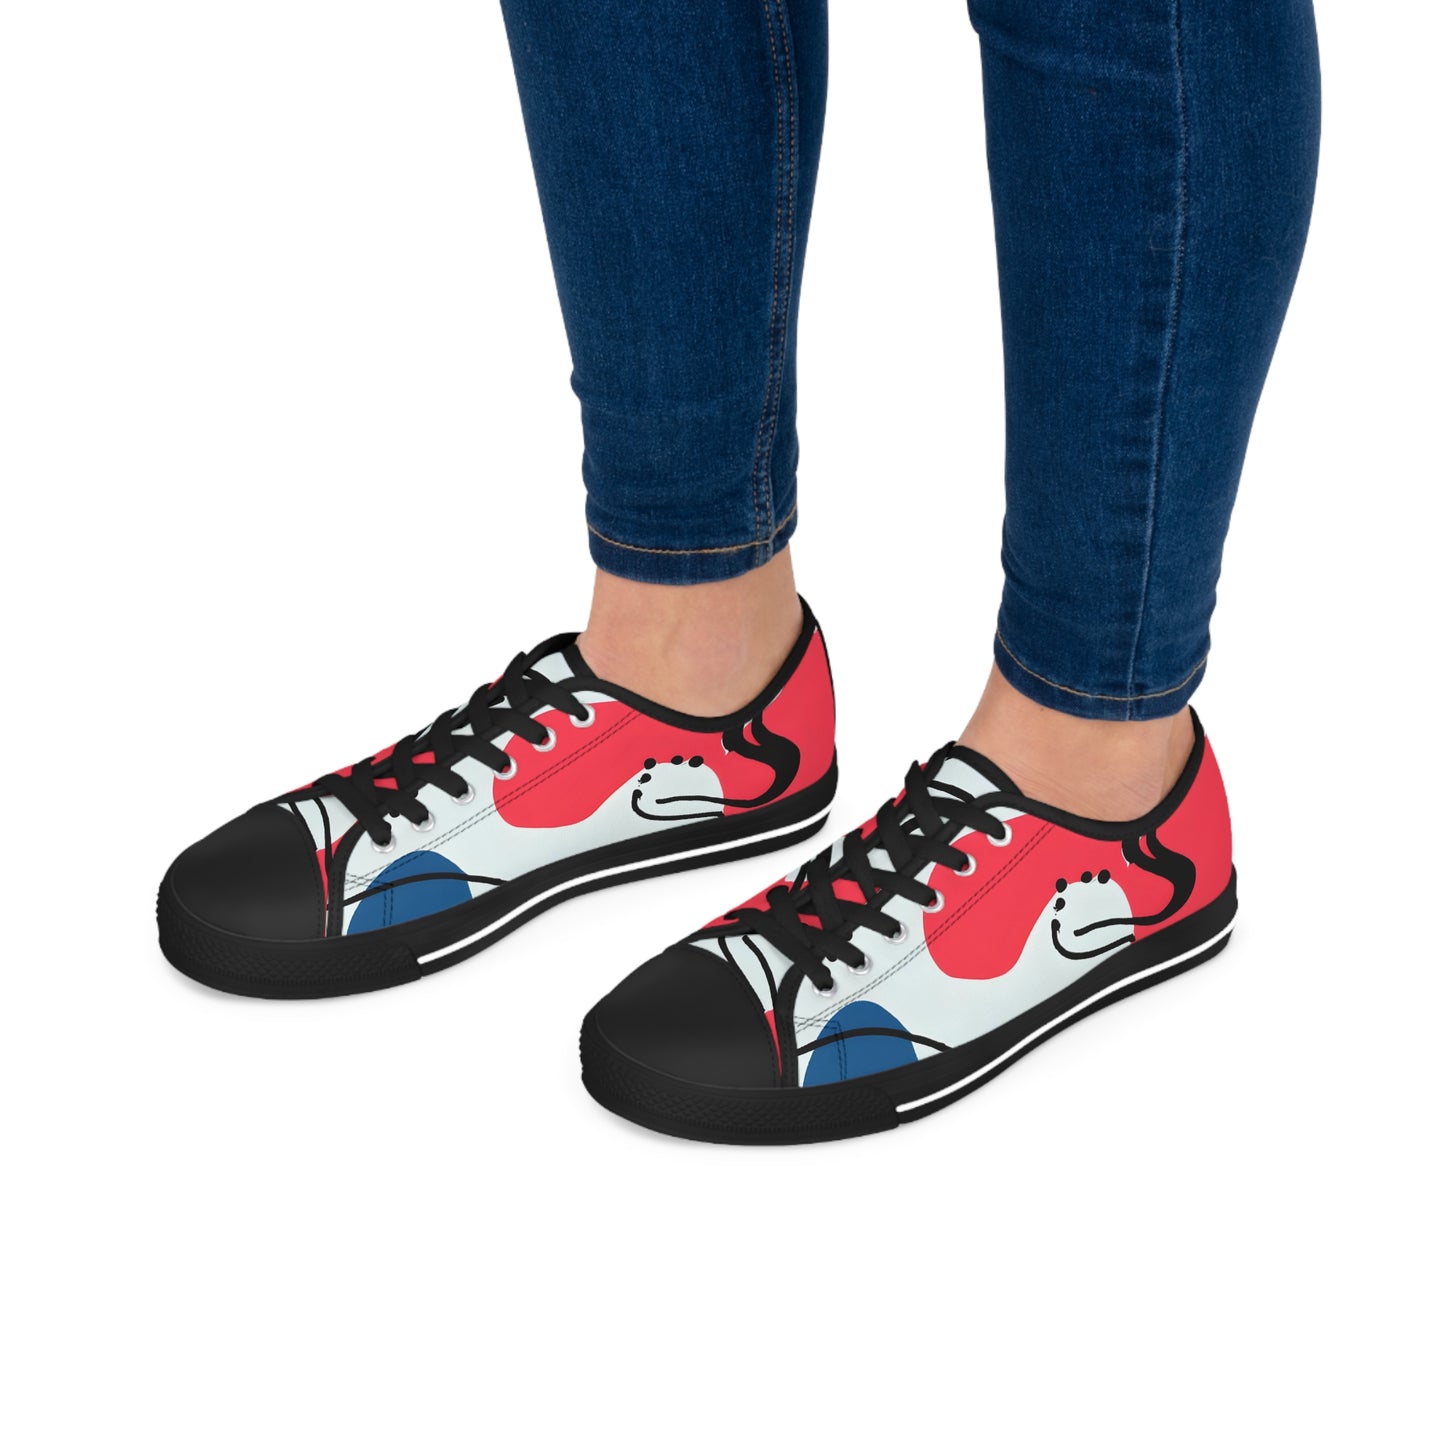 Manitou Winston - Women's Low-Top Sneakers